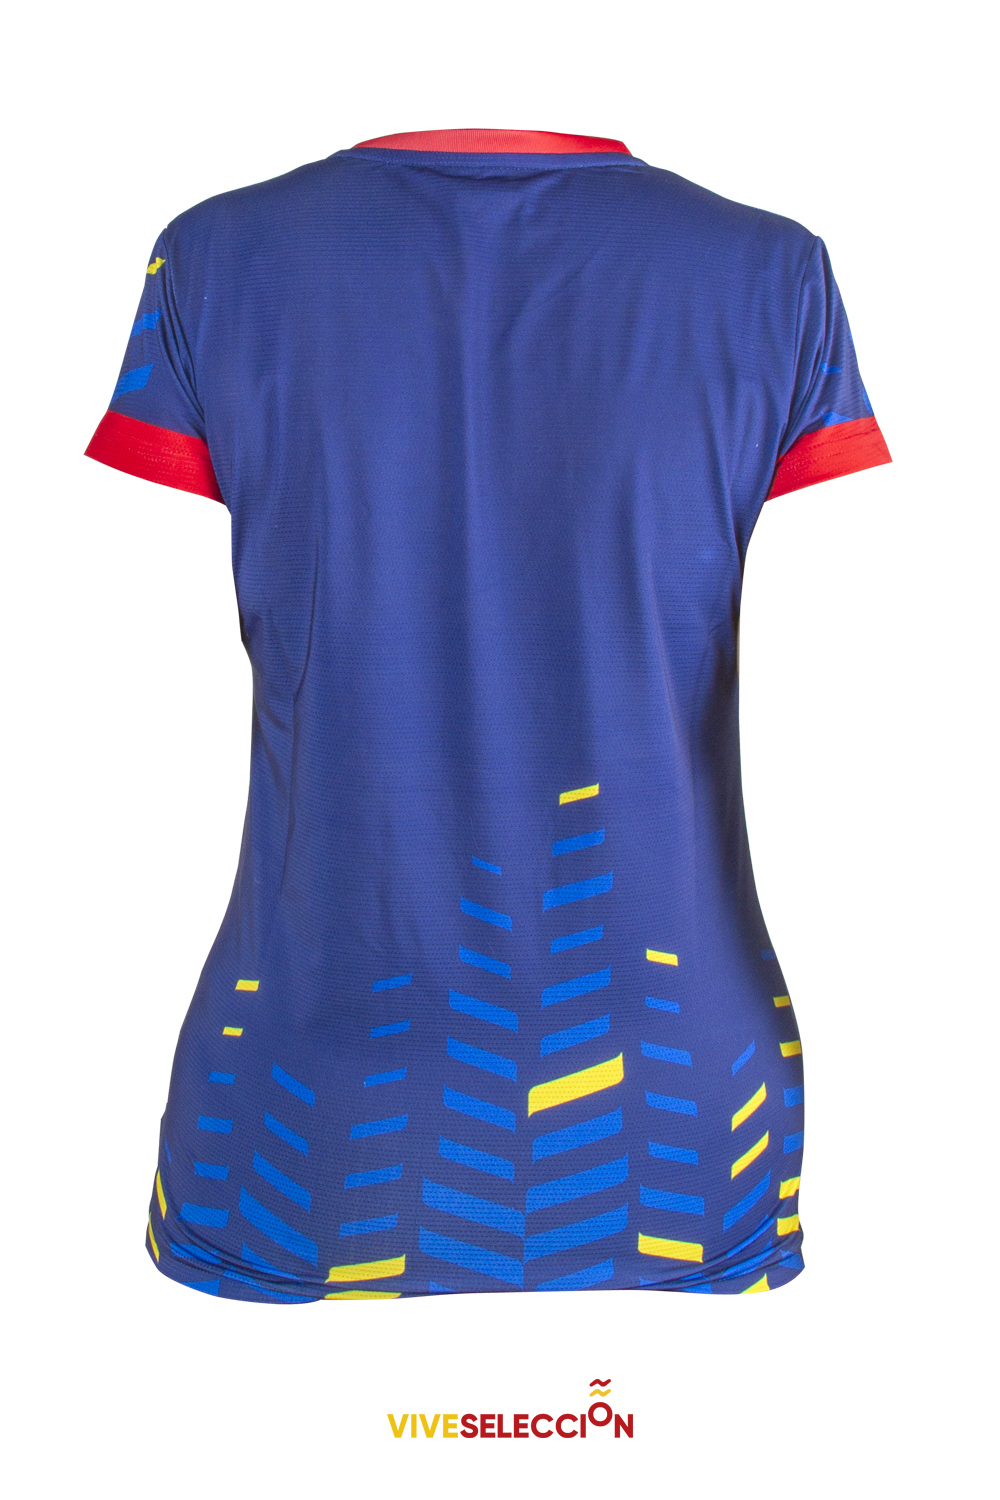 Camiseta selección española voleibol mujer segunda equipación de Luanvi